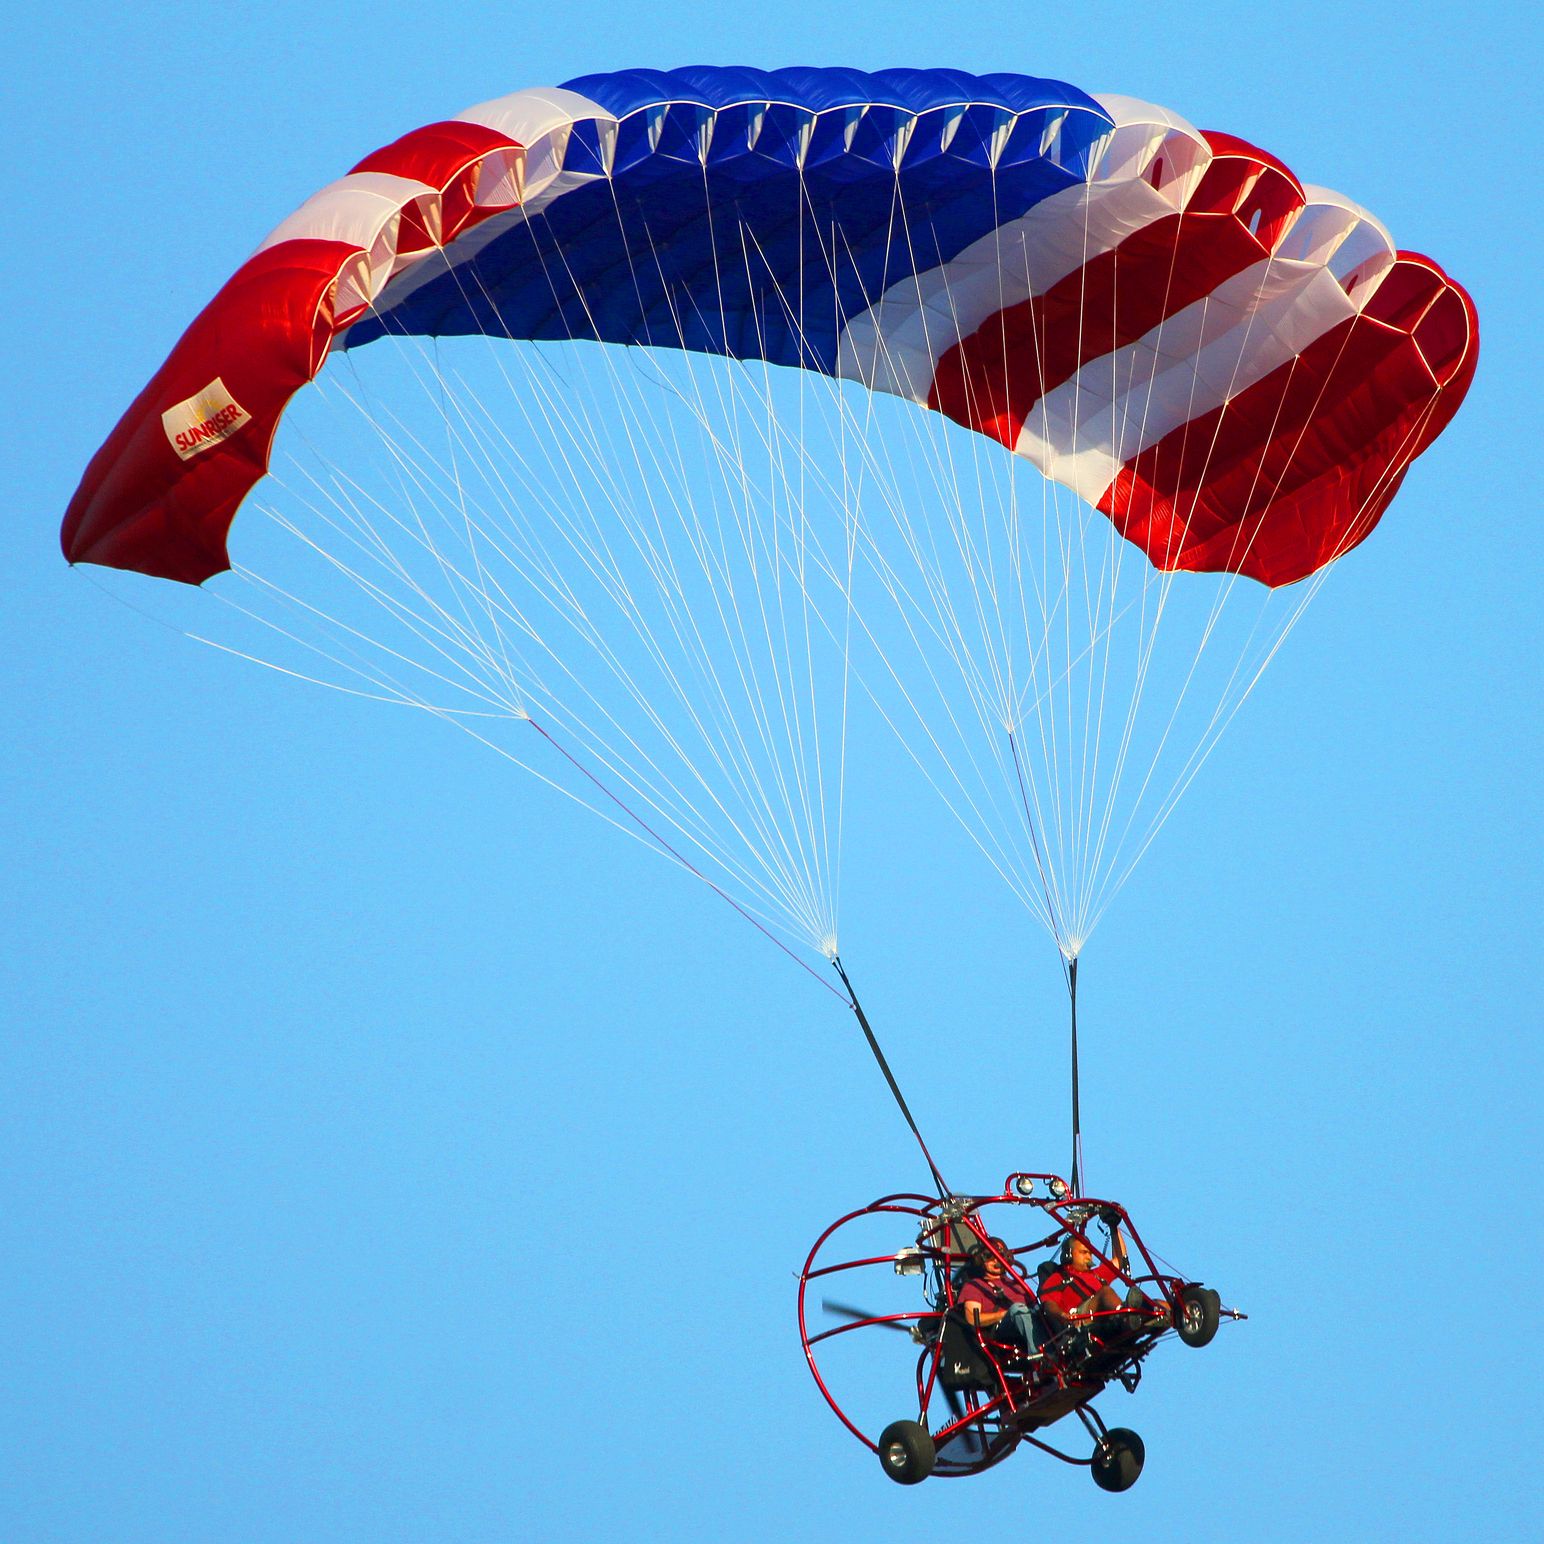 Air Adventure Powered Parachutes | Powered Parachute Discovery ...